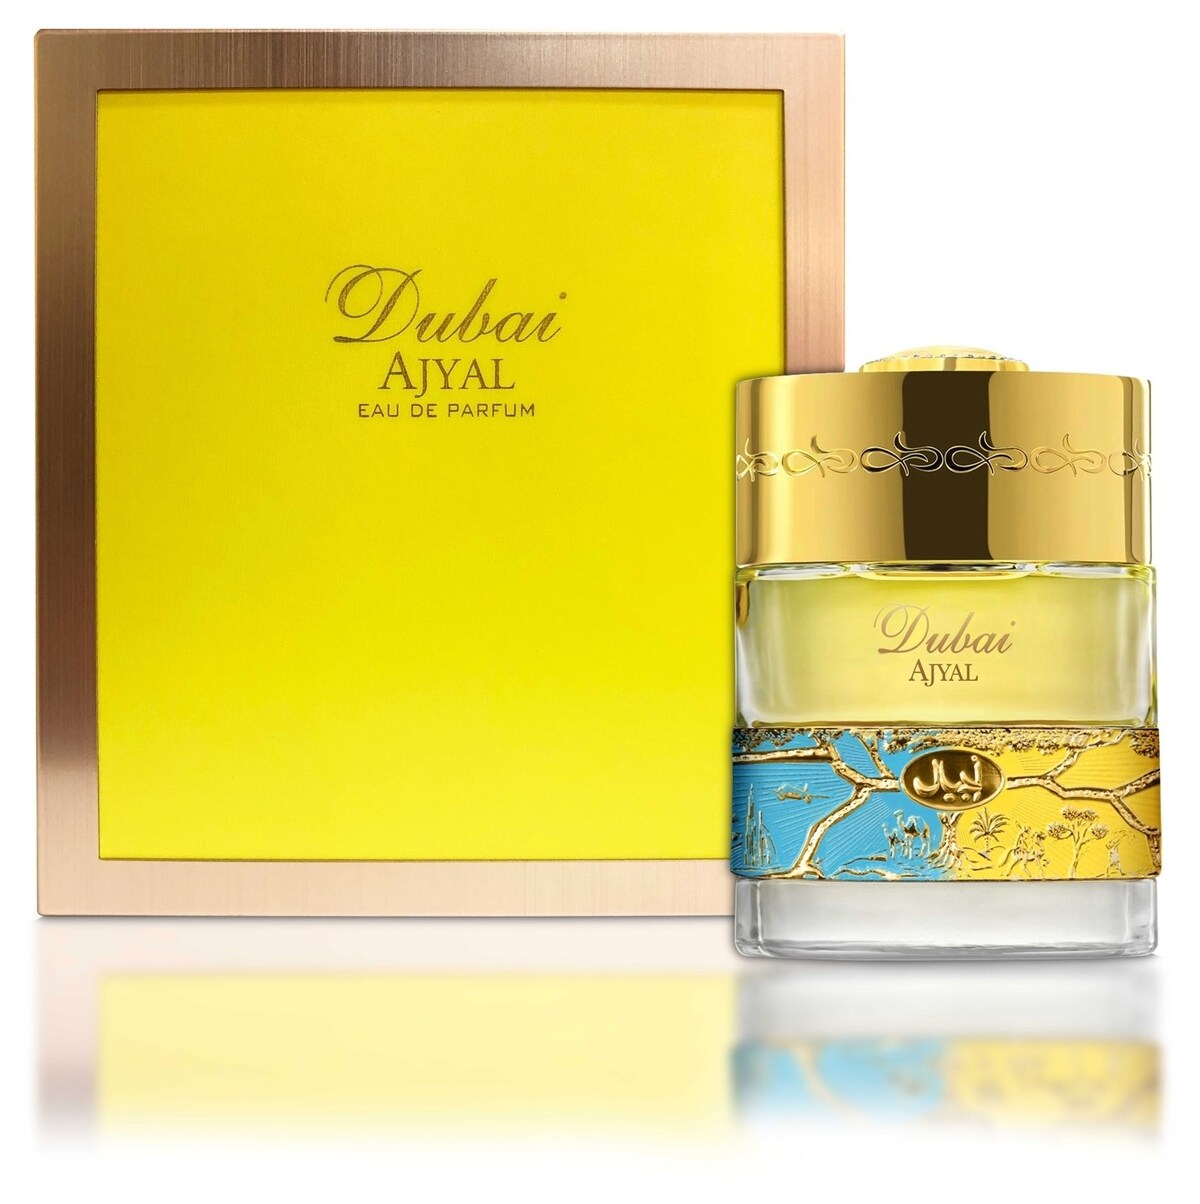 The Spirit of Dubai - Ajyal - Eau de Parfum